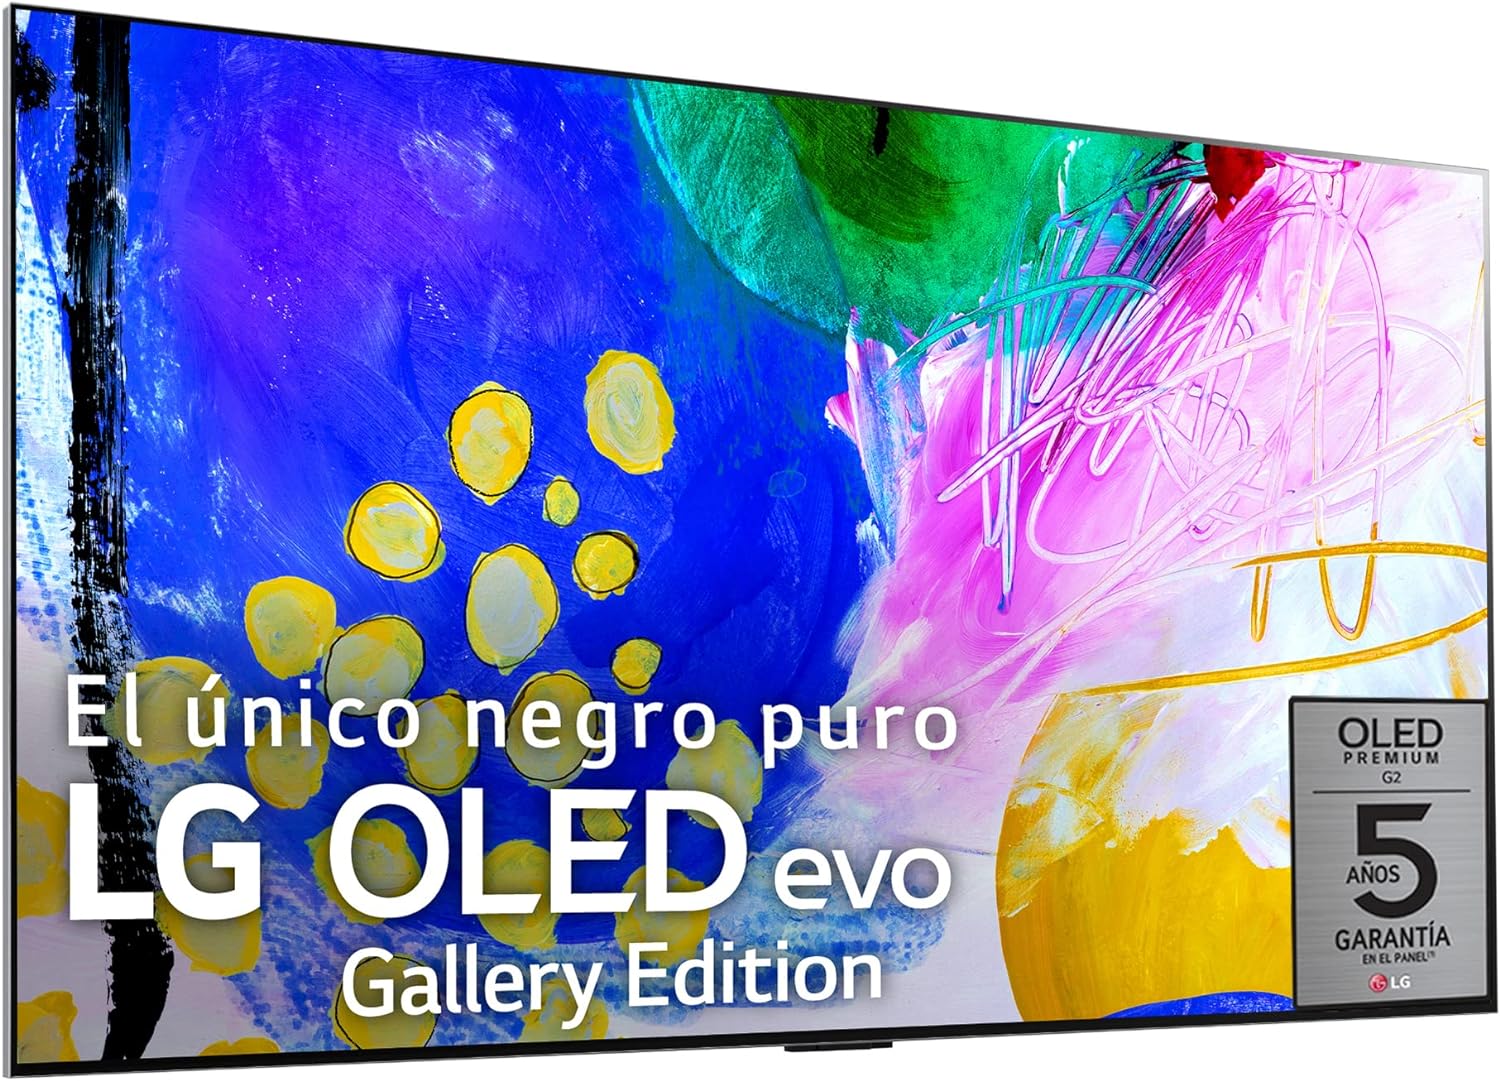 LG OLED Evo Gallery Edition